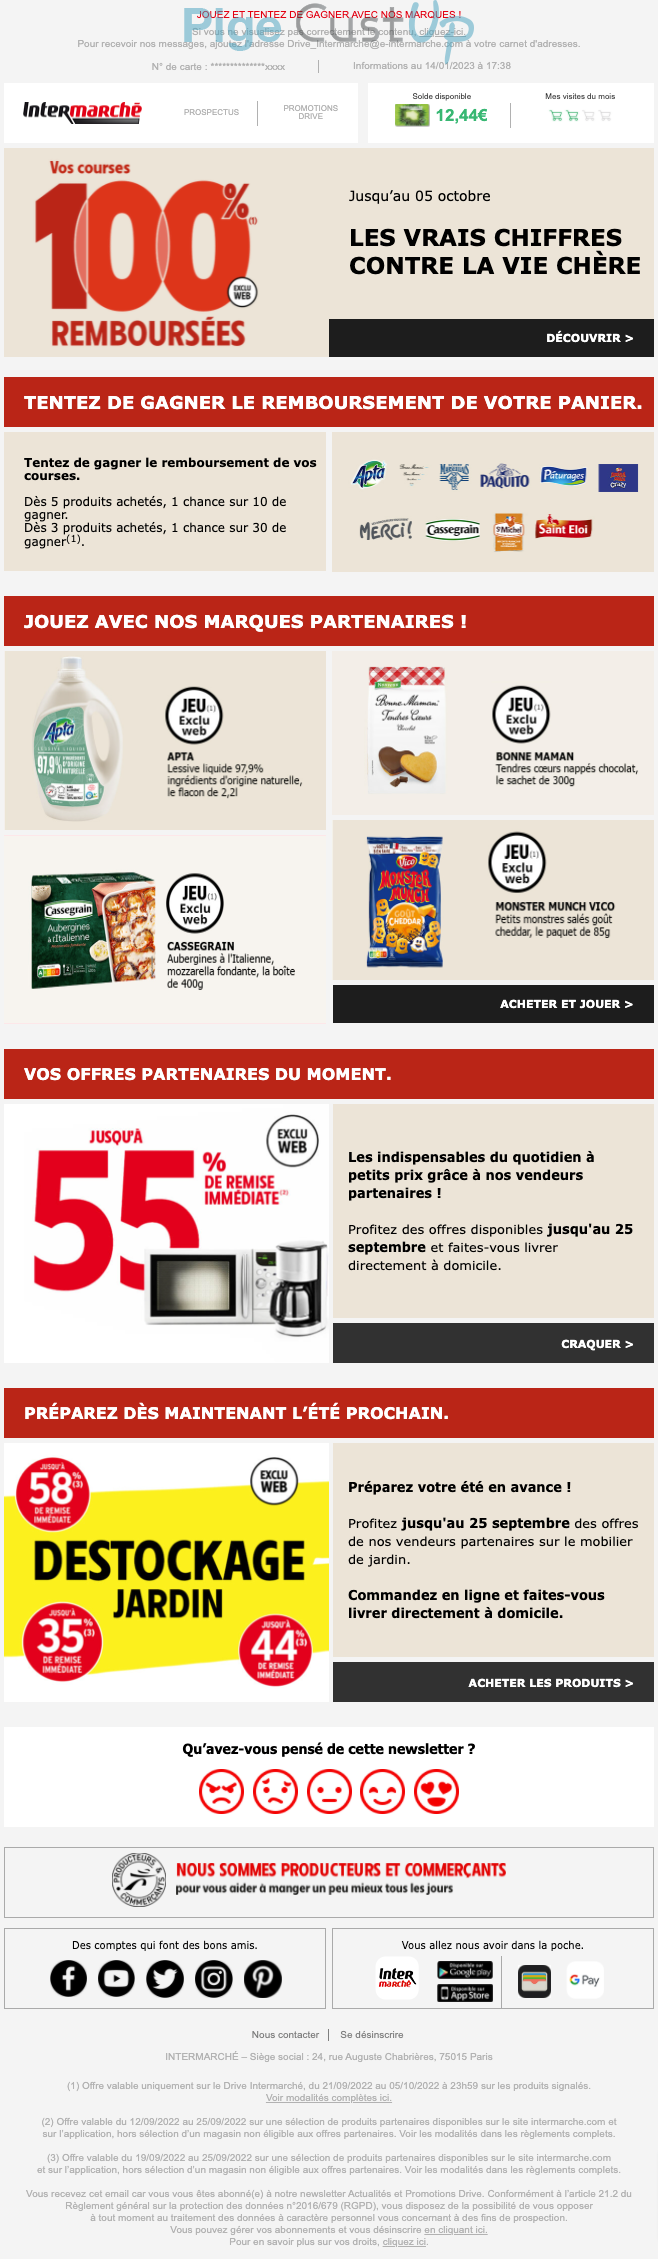 Exemple de Type de media  e-mailing - Intermarché - Marketing Acquisition - Jeu promo